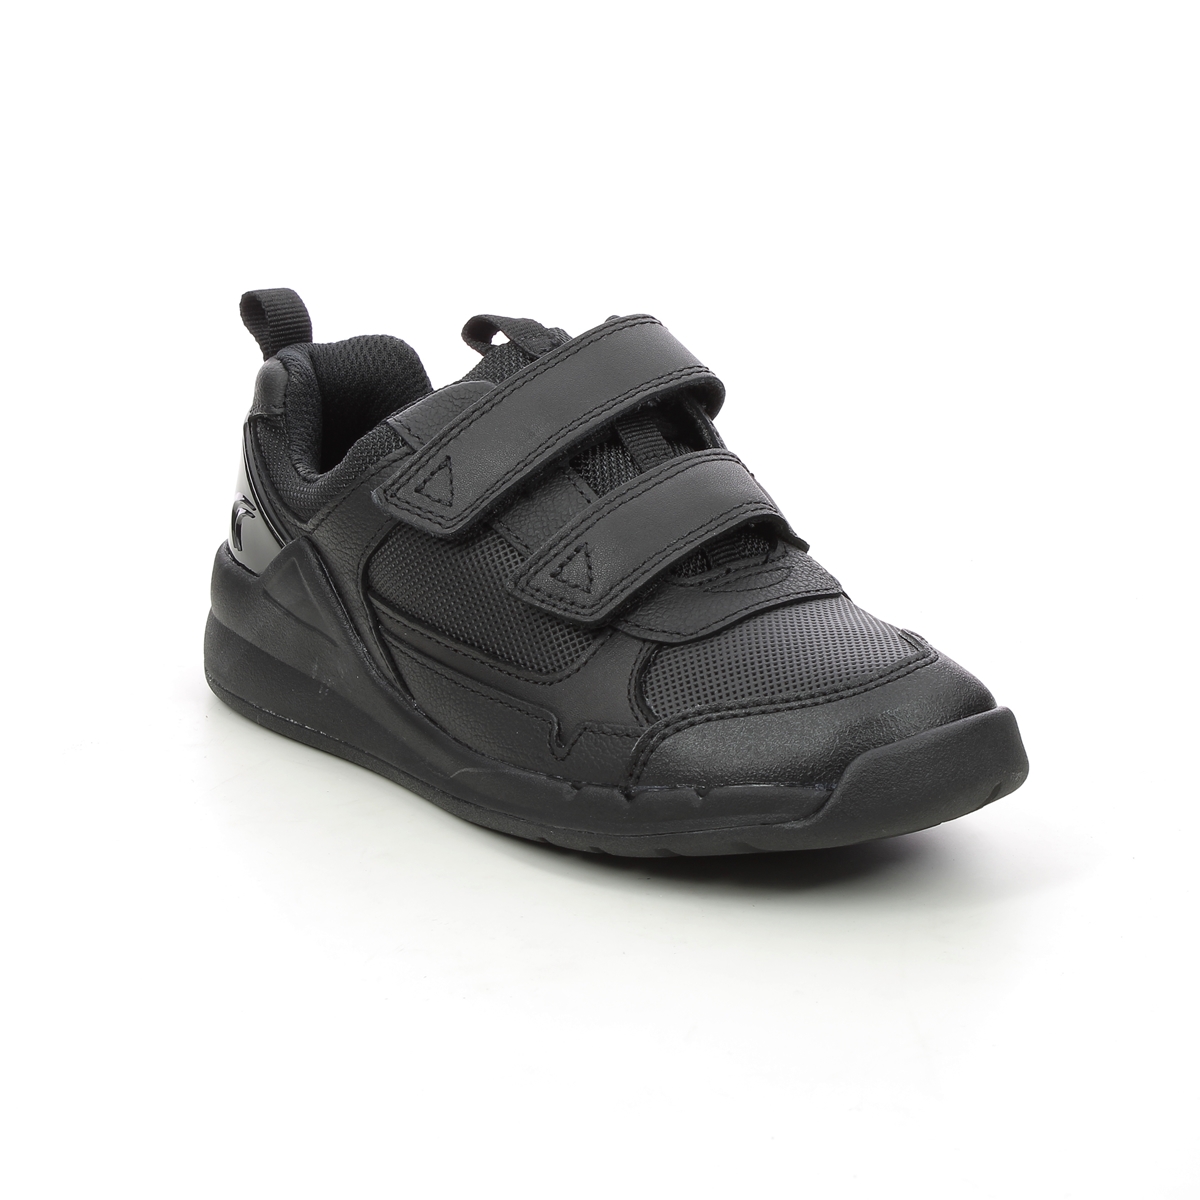 Clarks Orbit Sprint K Black Leather Kids Boys Shoes 534786F In Size 2 In Plain Black Leather F Width Fitting Regular Fit For kids